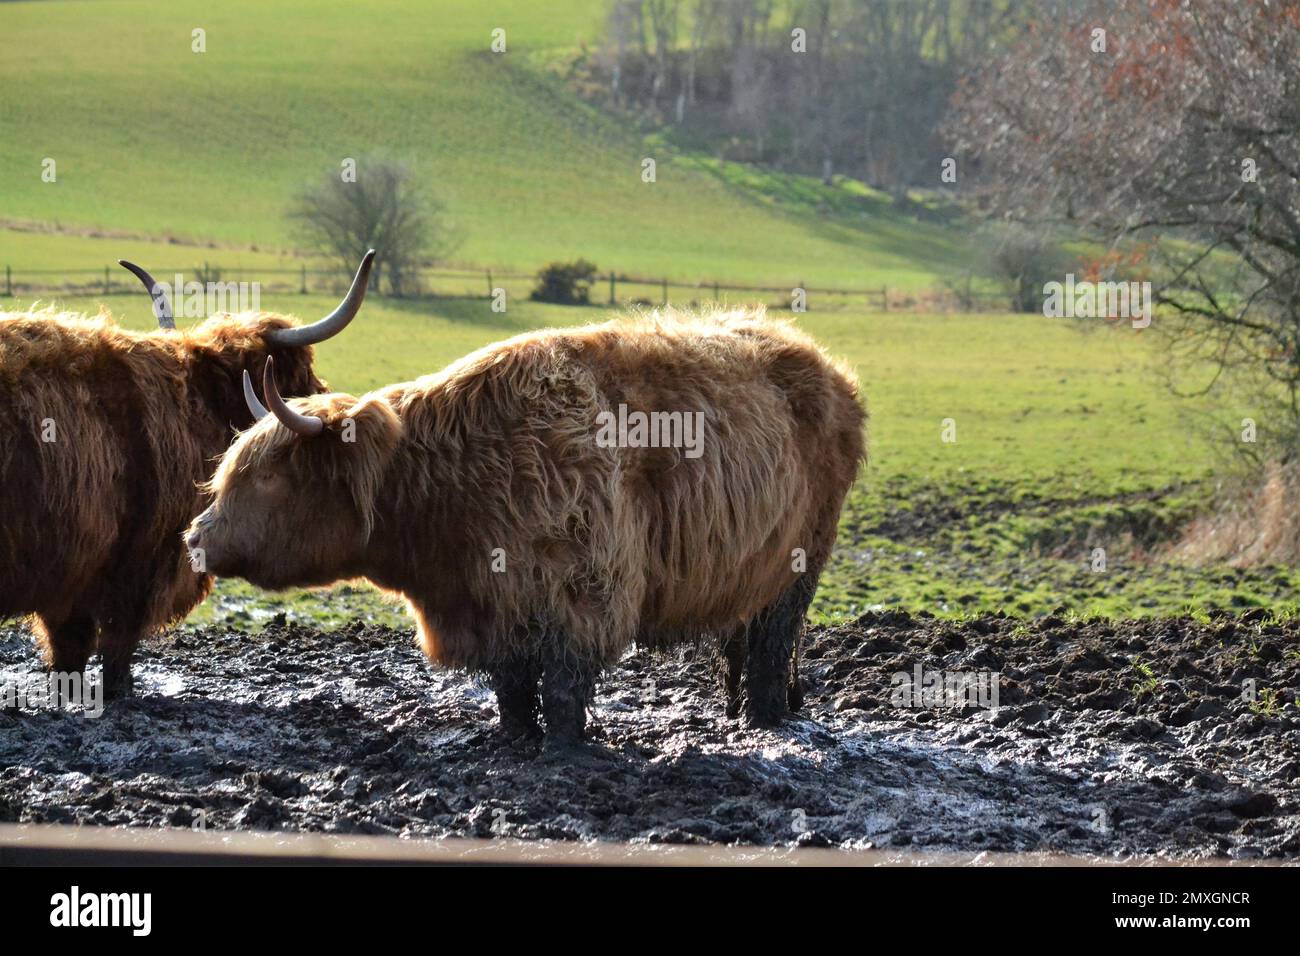 Highland-Rinder stehen auf einem Muddy Farmers Field - Hairy Cow - Long Hair - Strong Horns - Bos Taurus Bovidae Family - Yorkshire - UK Stockfoto